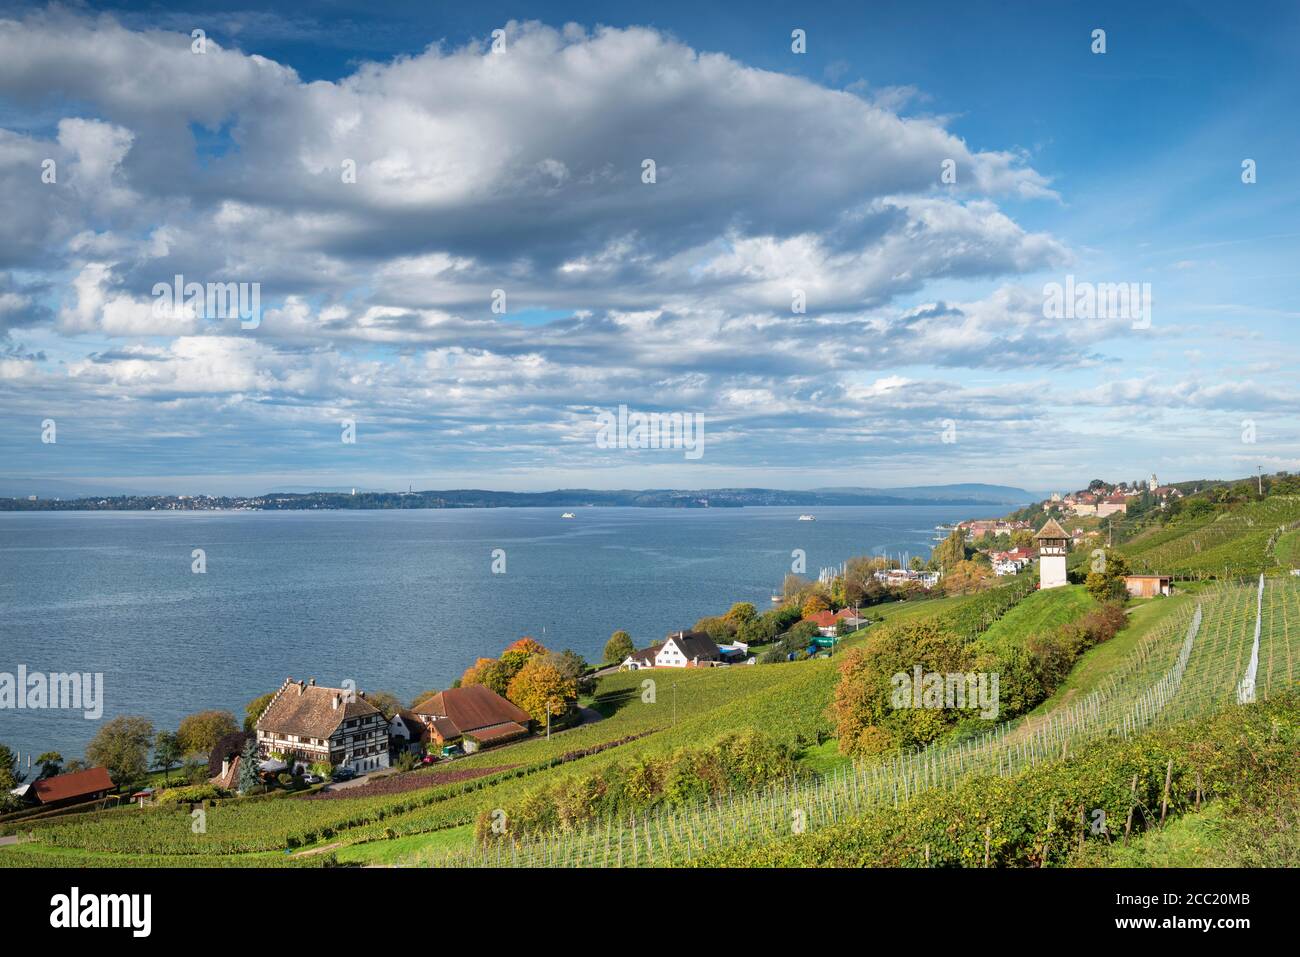 Germany, Baden Wuerttemberg, View of Rebgut Haltnau vineyard at Lake Constance Stock Photo